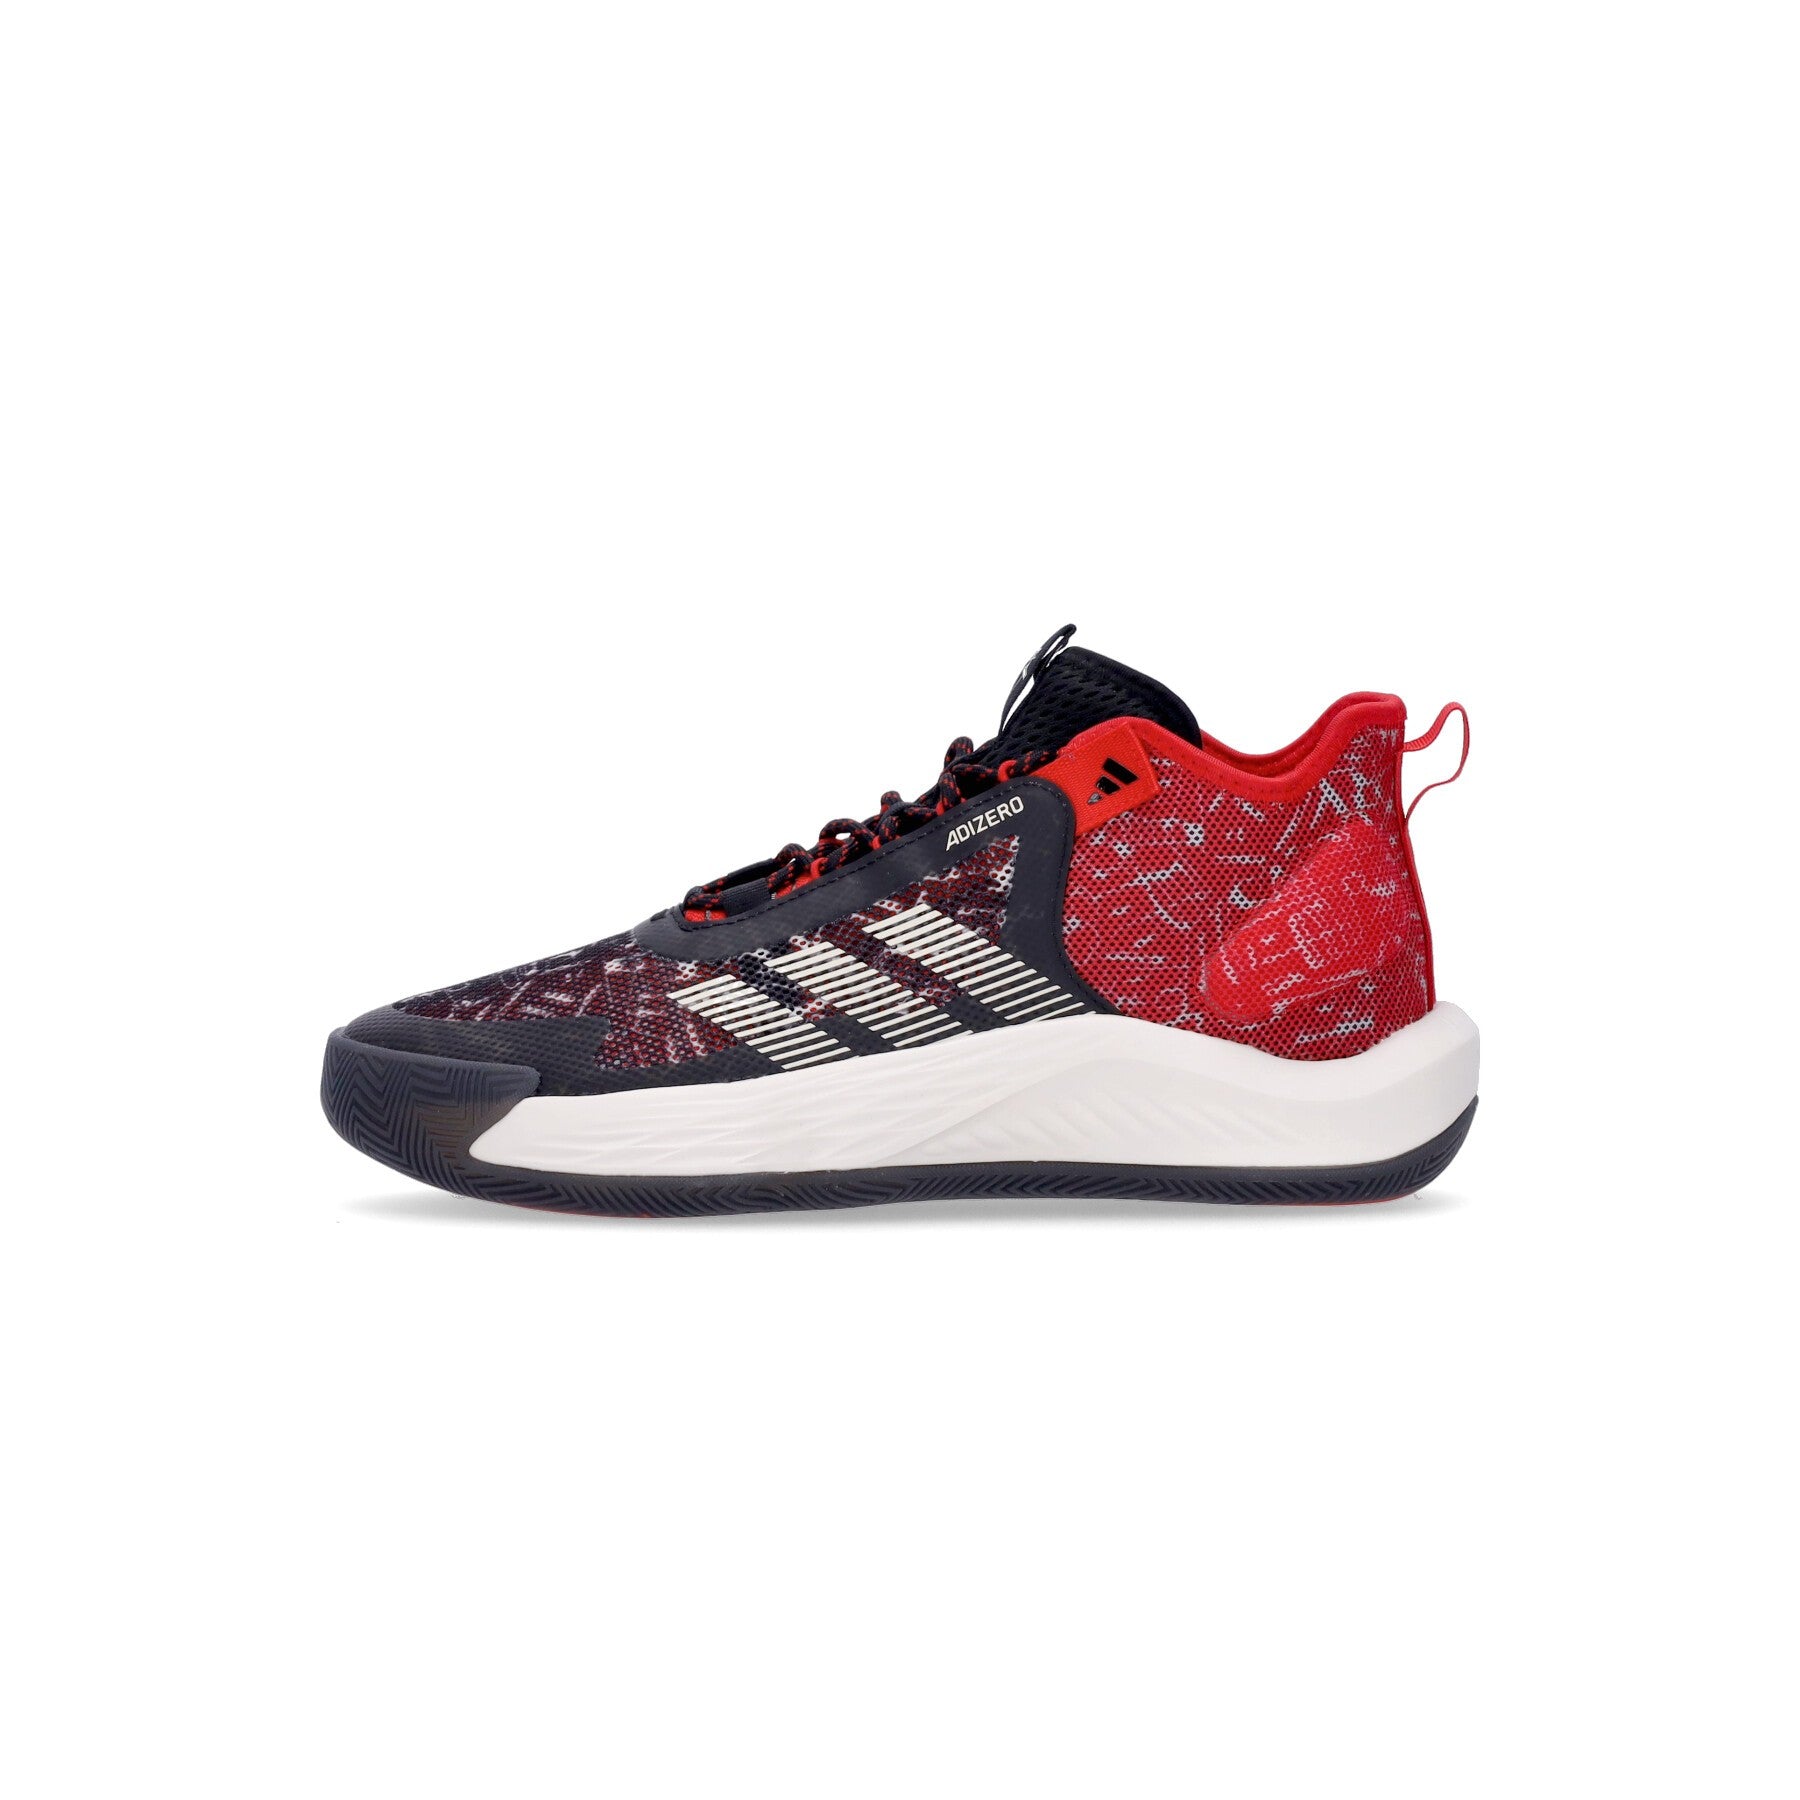 Adidas, Scarpa Basket Uomo Adizero Select, Core Black/better Scarlet/off White